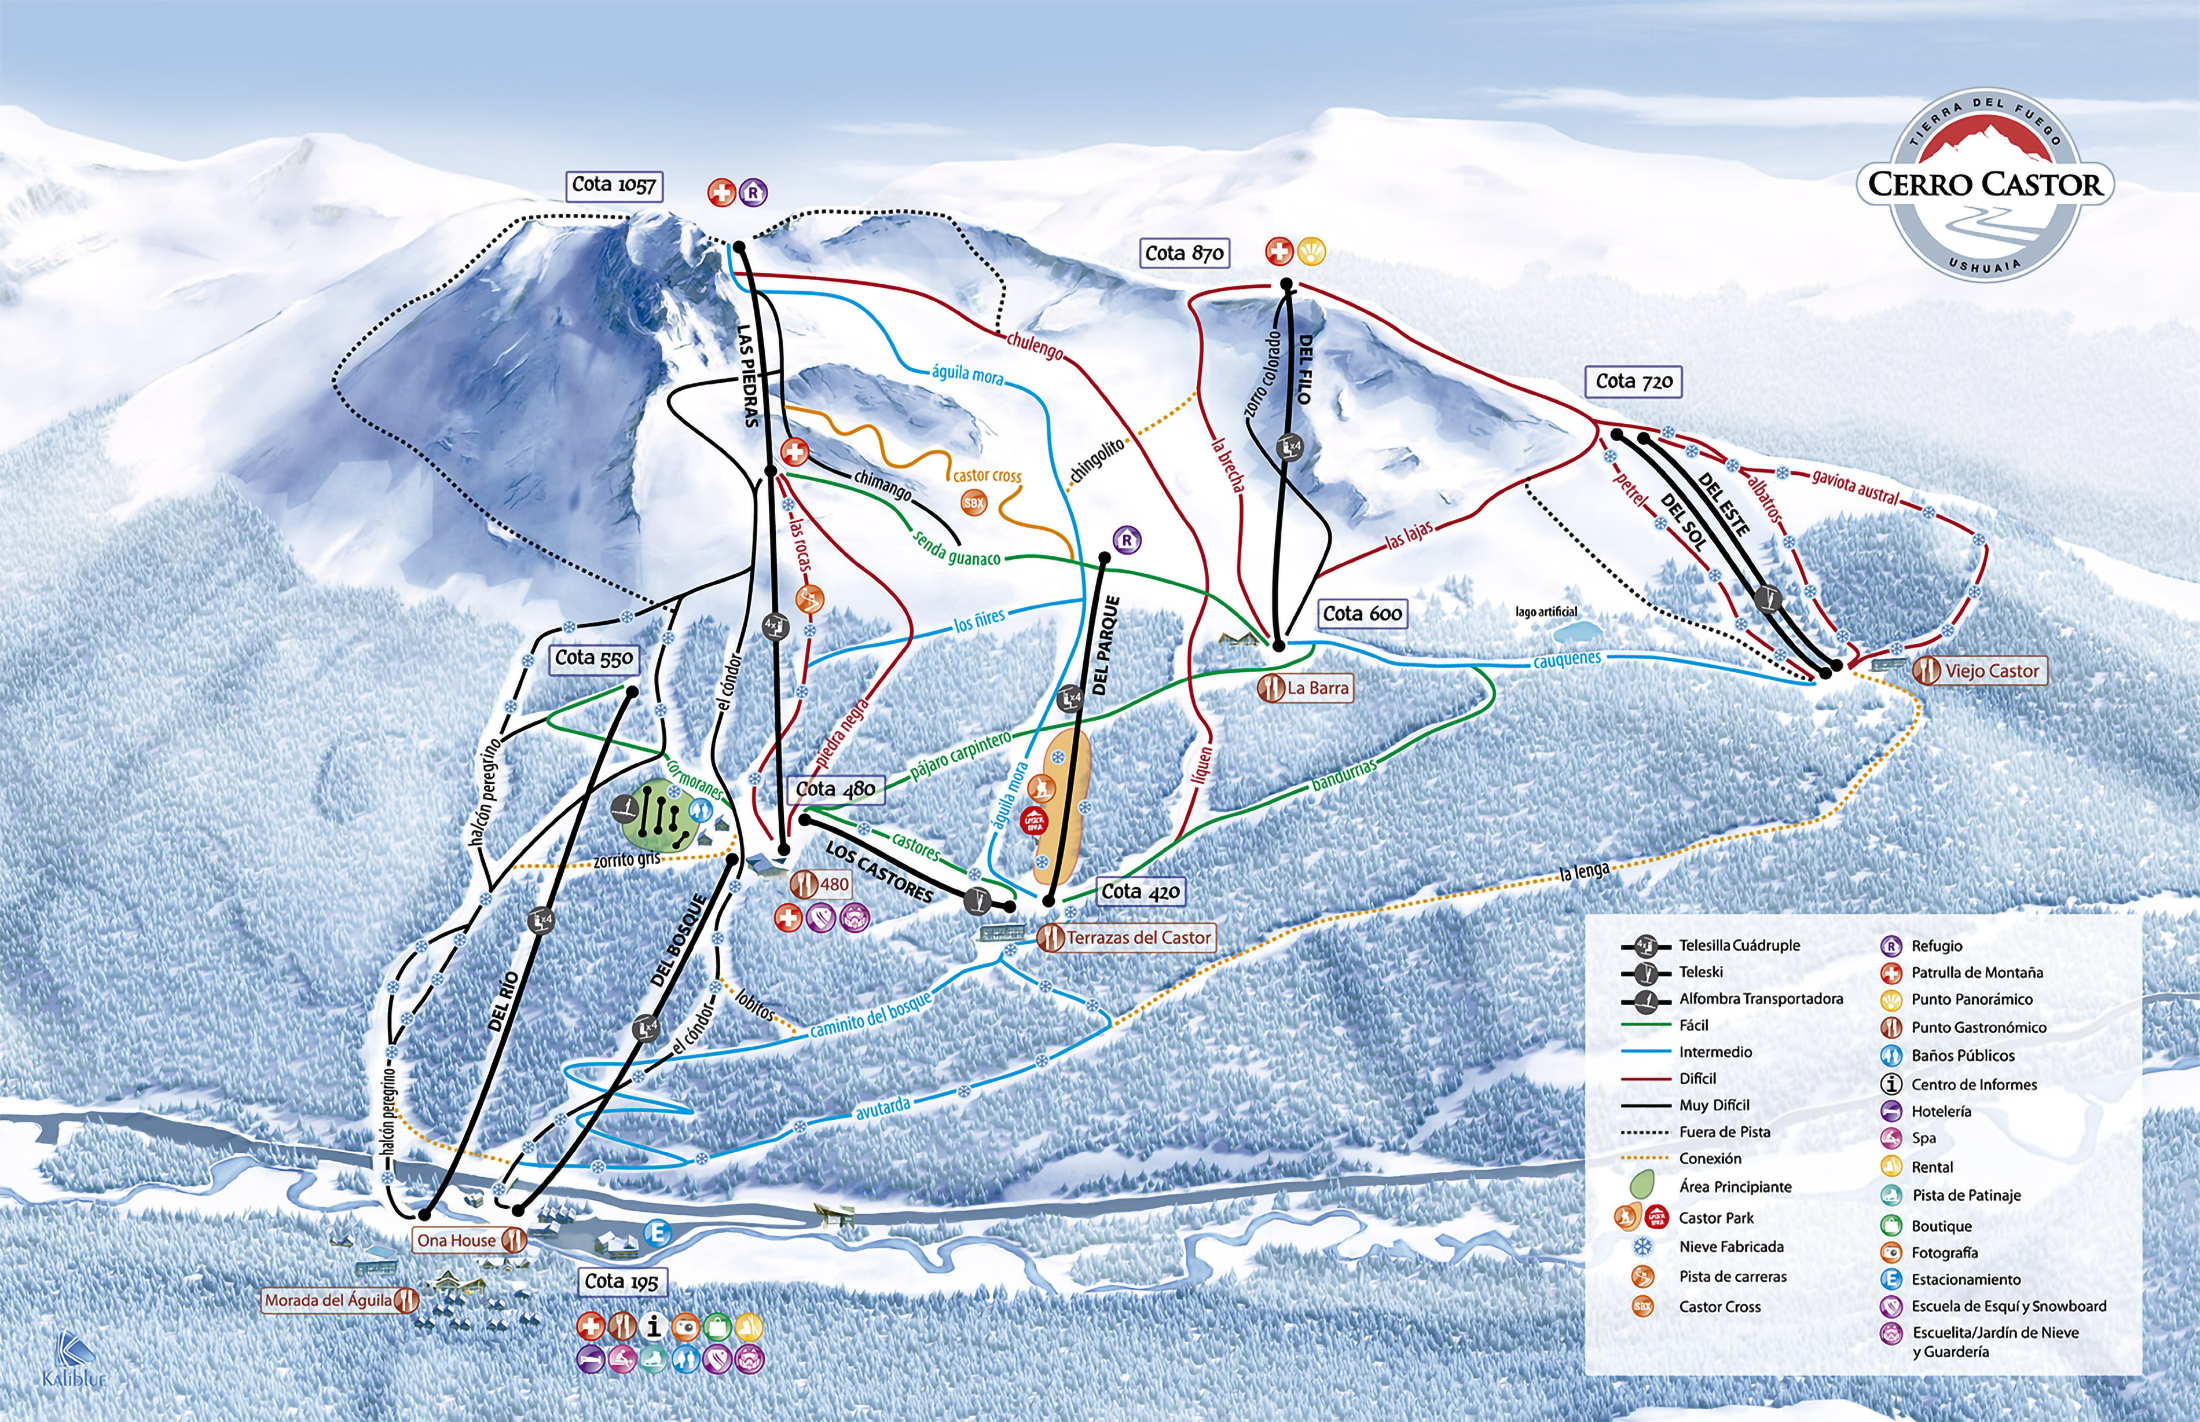 Cerro Castor Ski Resort trail map